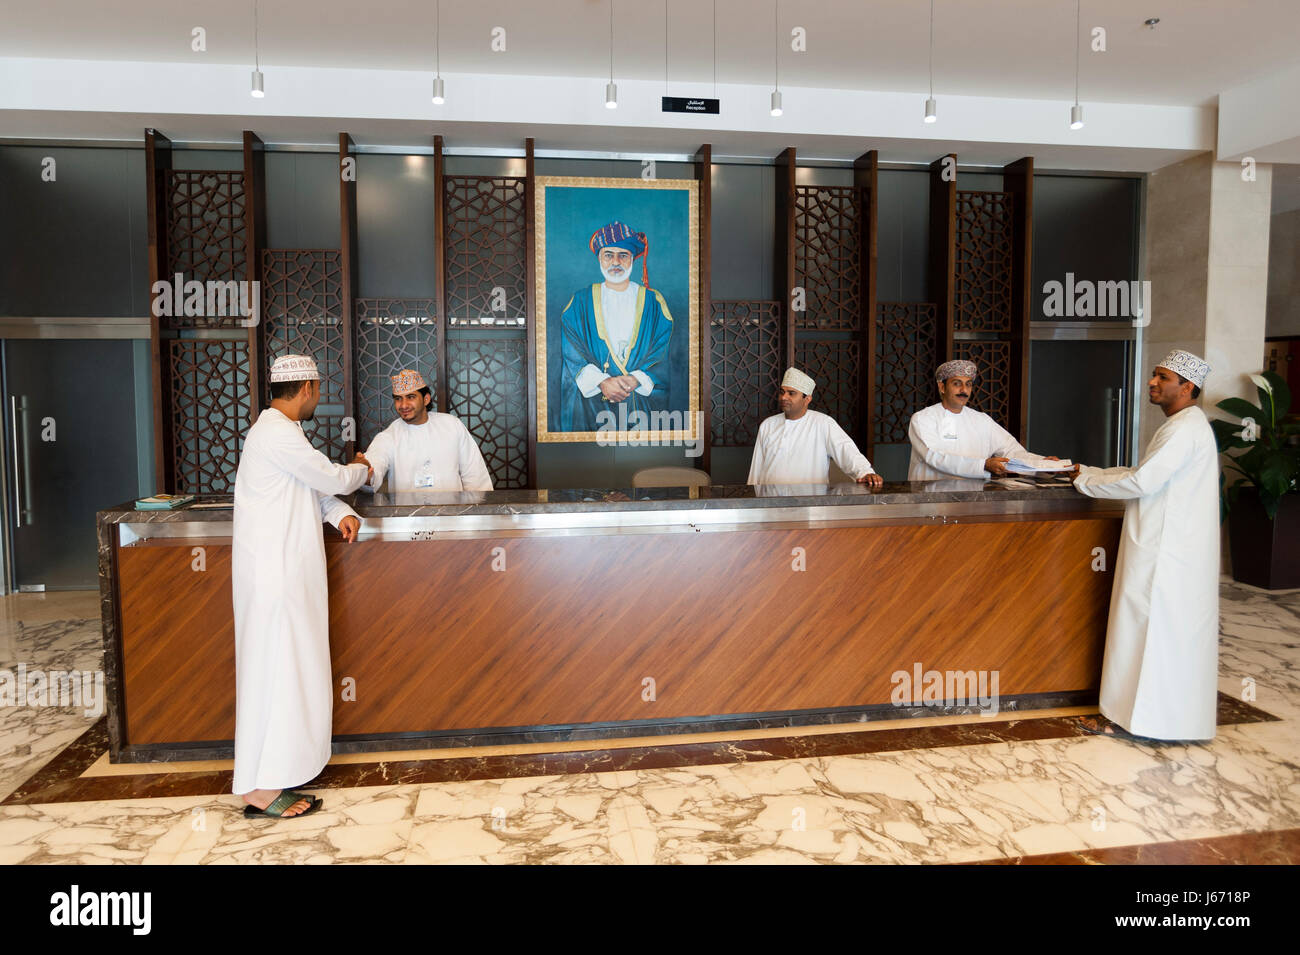 Oman Arab Bank High Resolution Stock Photography and Images - Alamy